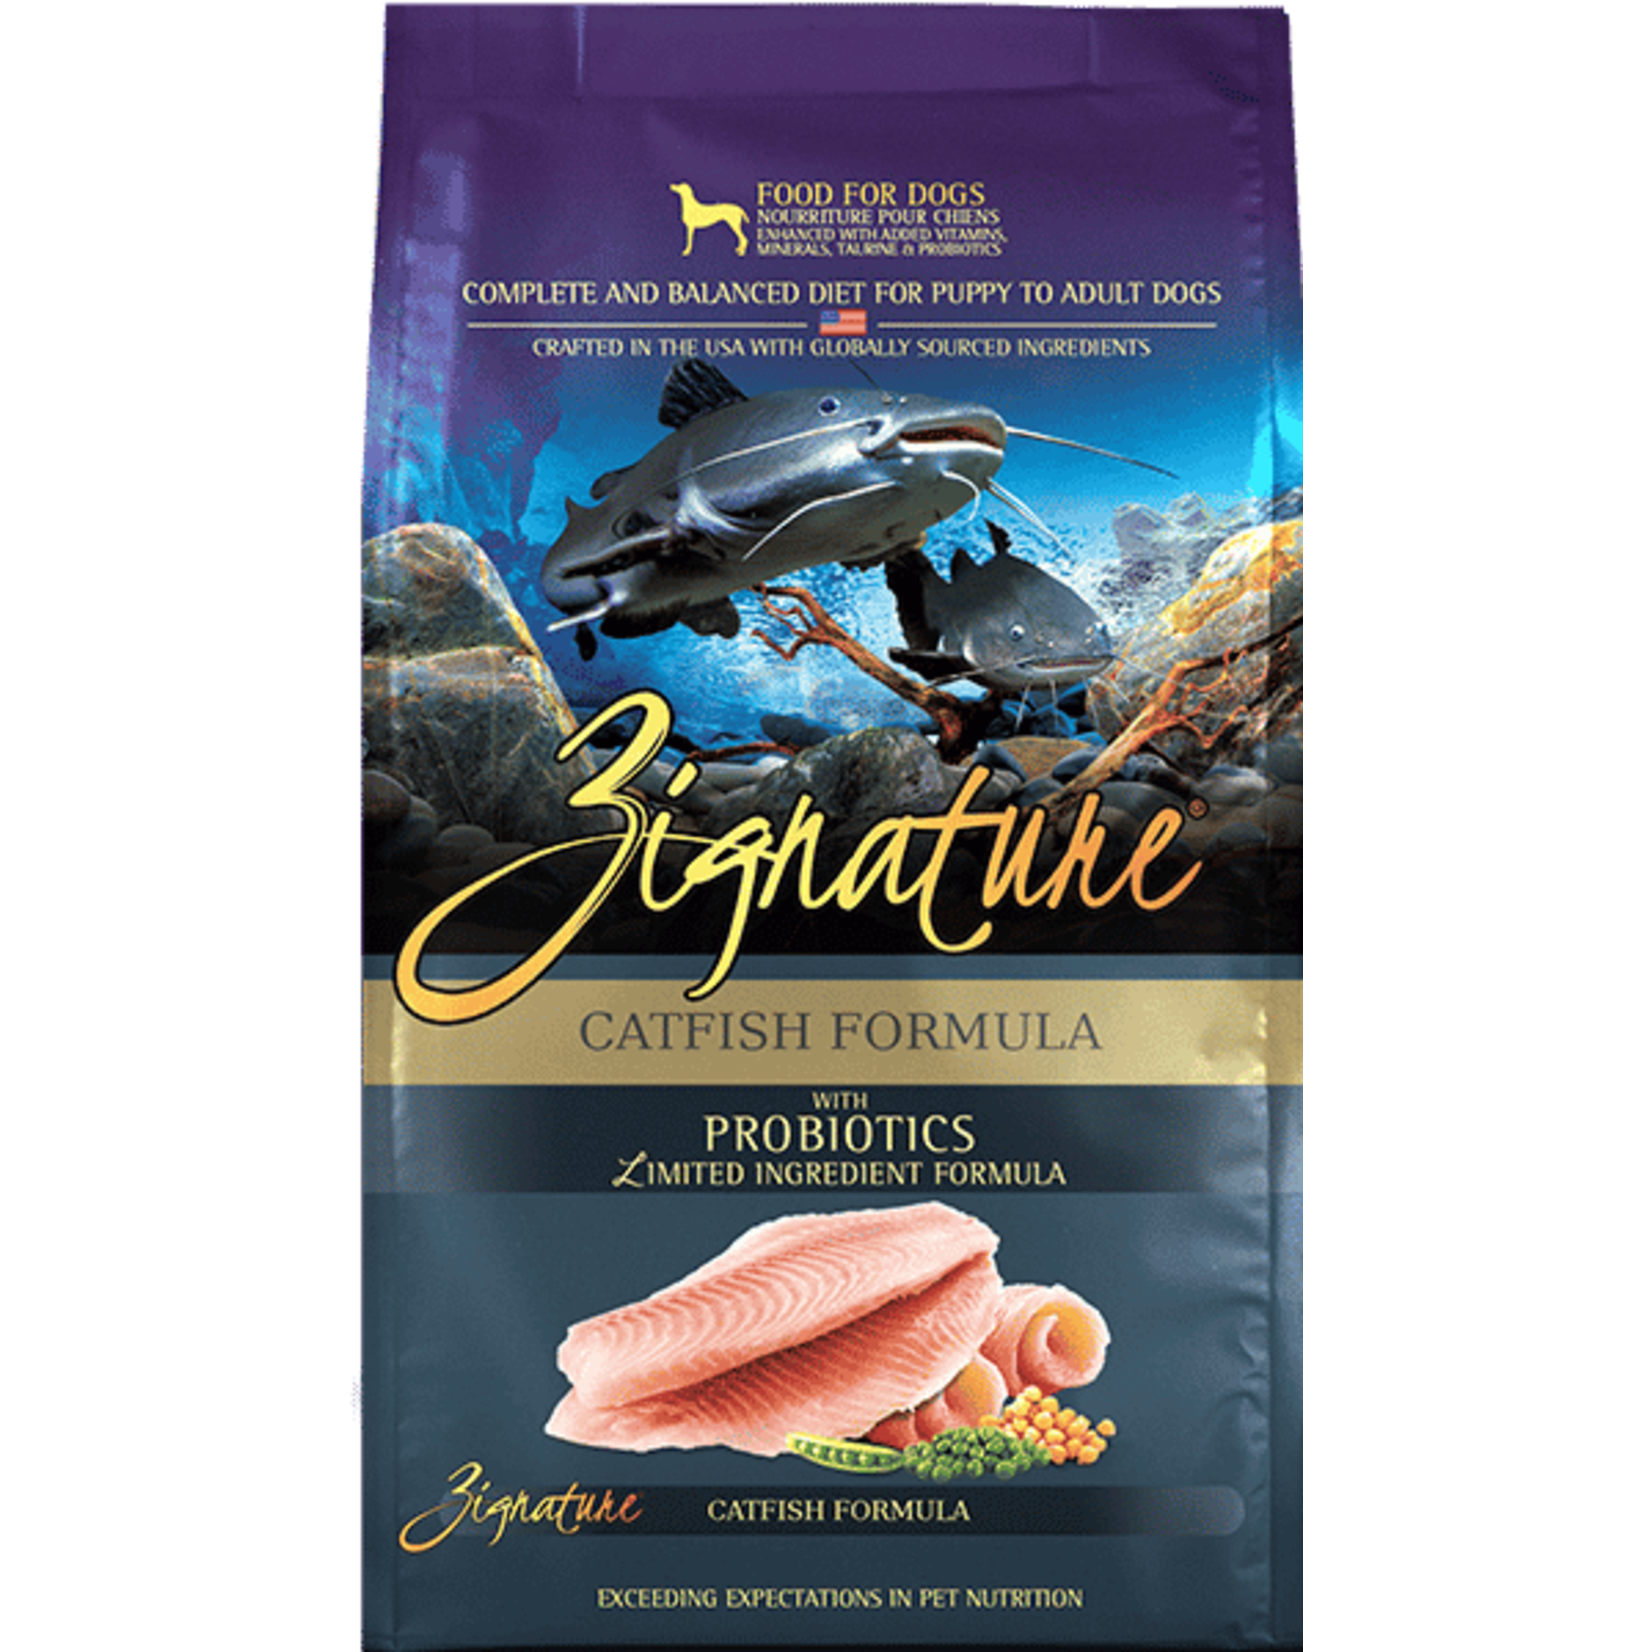 Zignature Zignature Dry Dog Food Limited Ingredient Formula Catfish Formula Grain Free